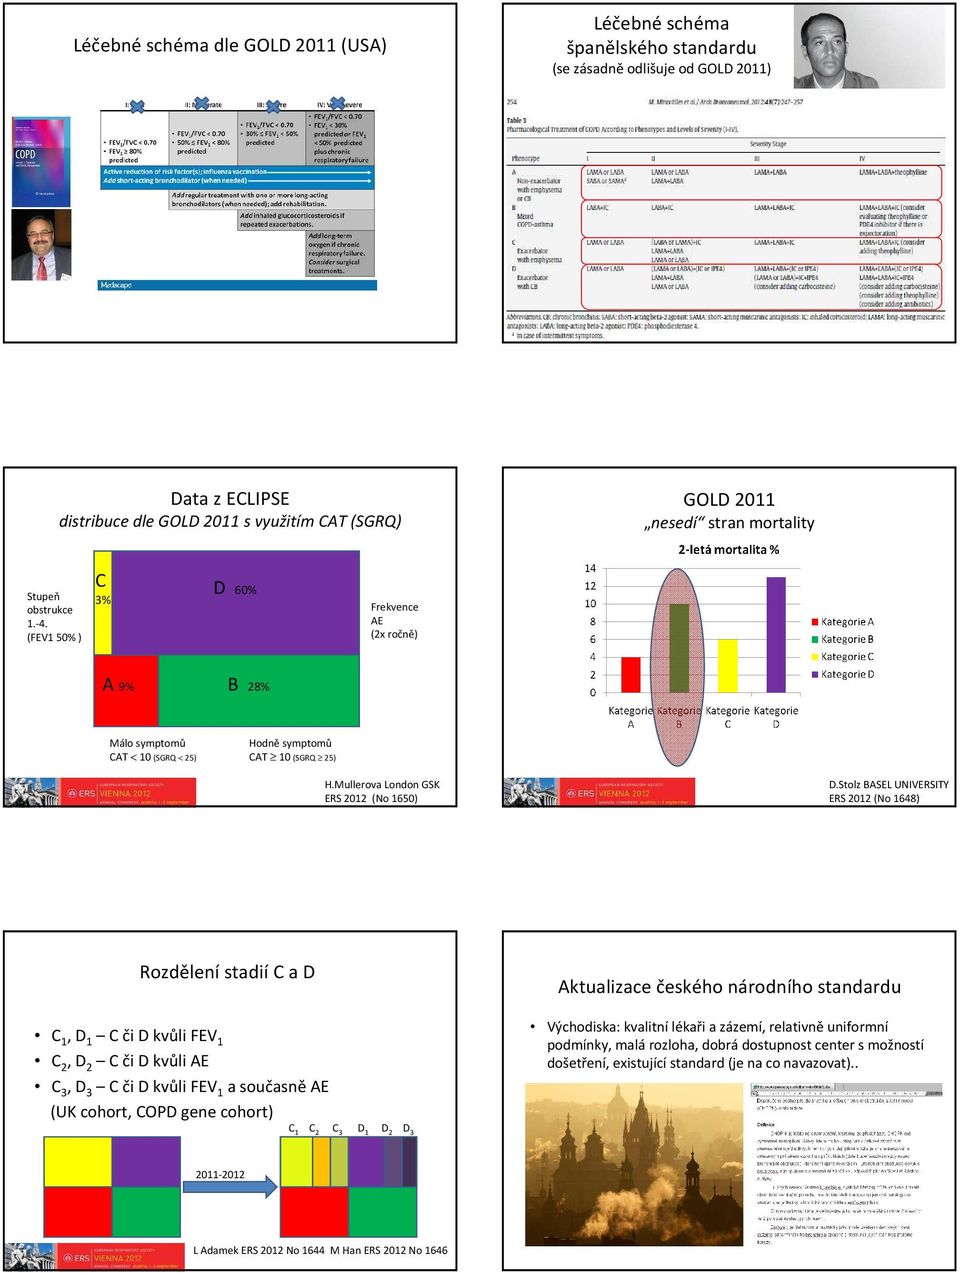 Stolz BASEL UNIVERSITY ERS 2012 (No 1648) RozdělenístadiíC a D C 1, D 1 C či D kvůli FEV 1 C 2, D 2 C či D kvůli AE C 3, D 3 C či D kvůli FEV 1 a současněae (UK cohort, COPD gene cohort) C 1 C 2 C 3